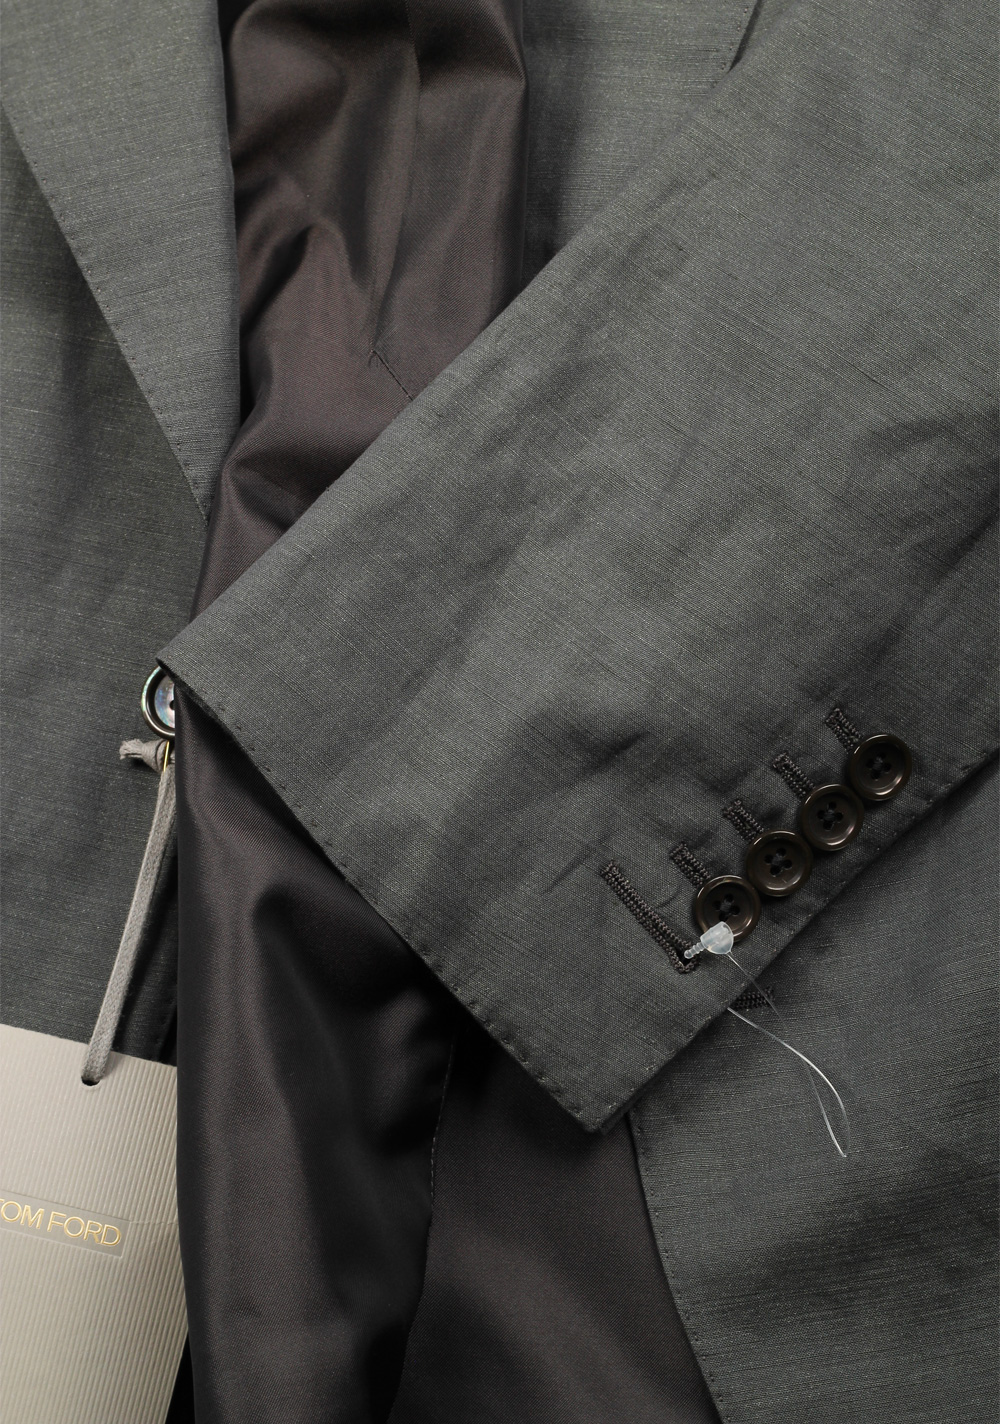 TOM FORD Shelton Greenish Gray Suit Size 54 / 44 U.S. | Costume Limité